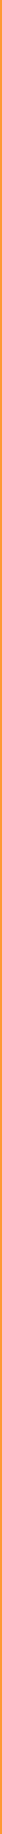 Linea arancio